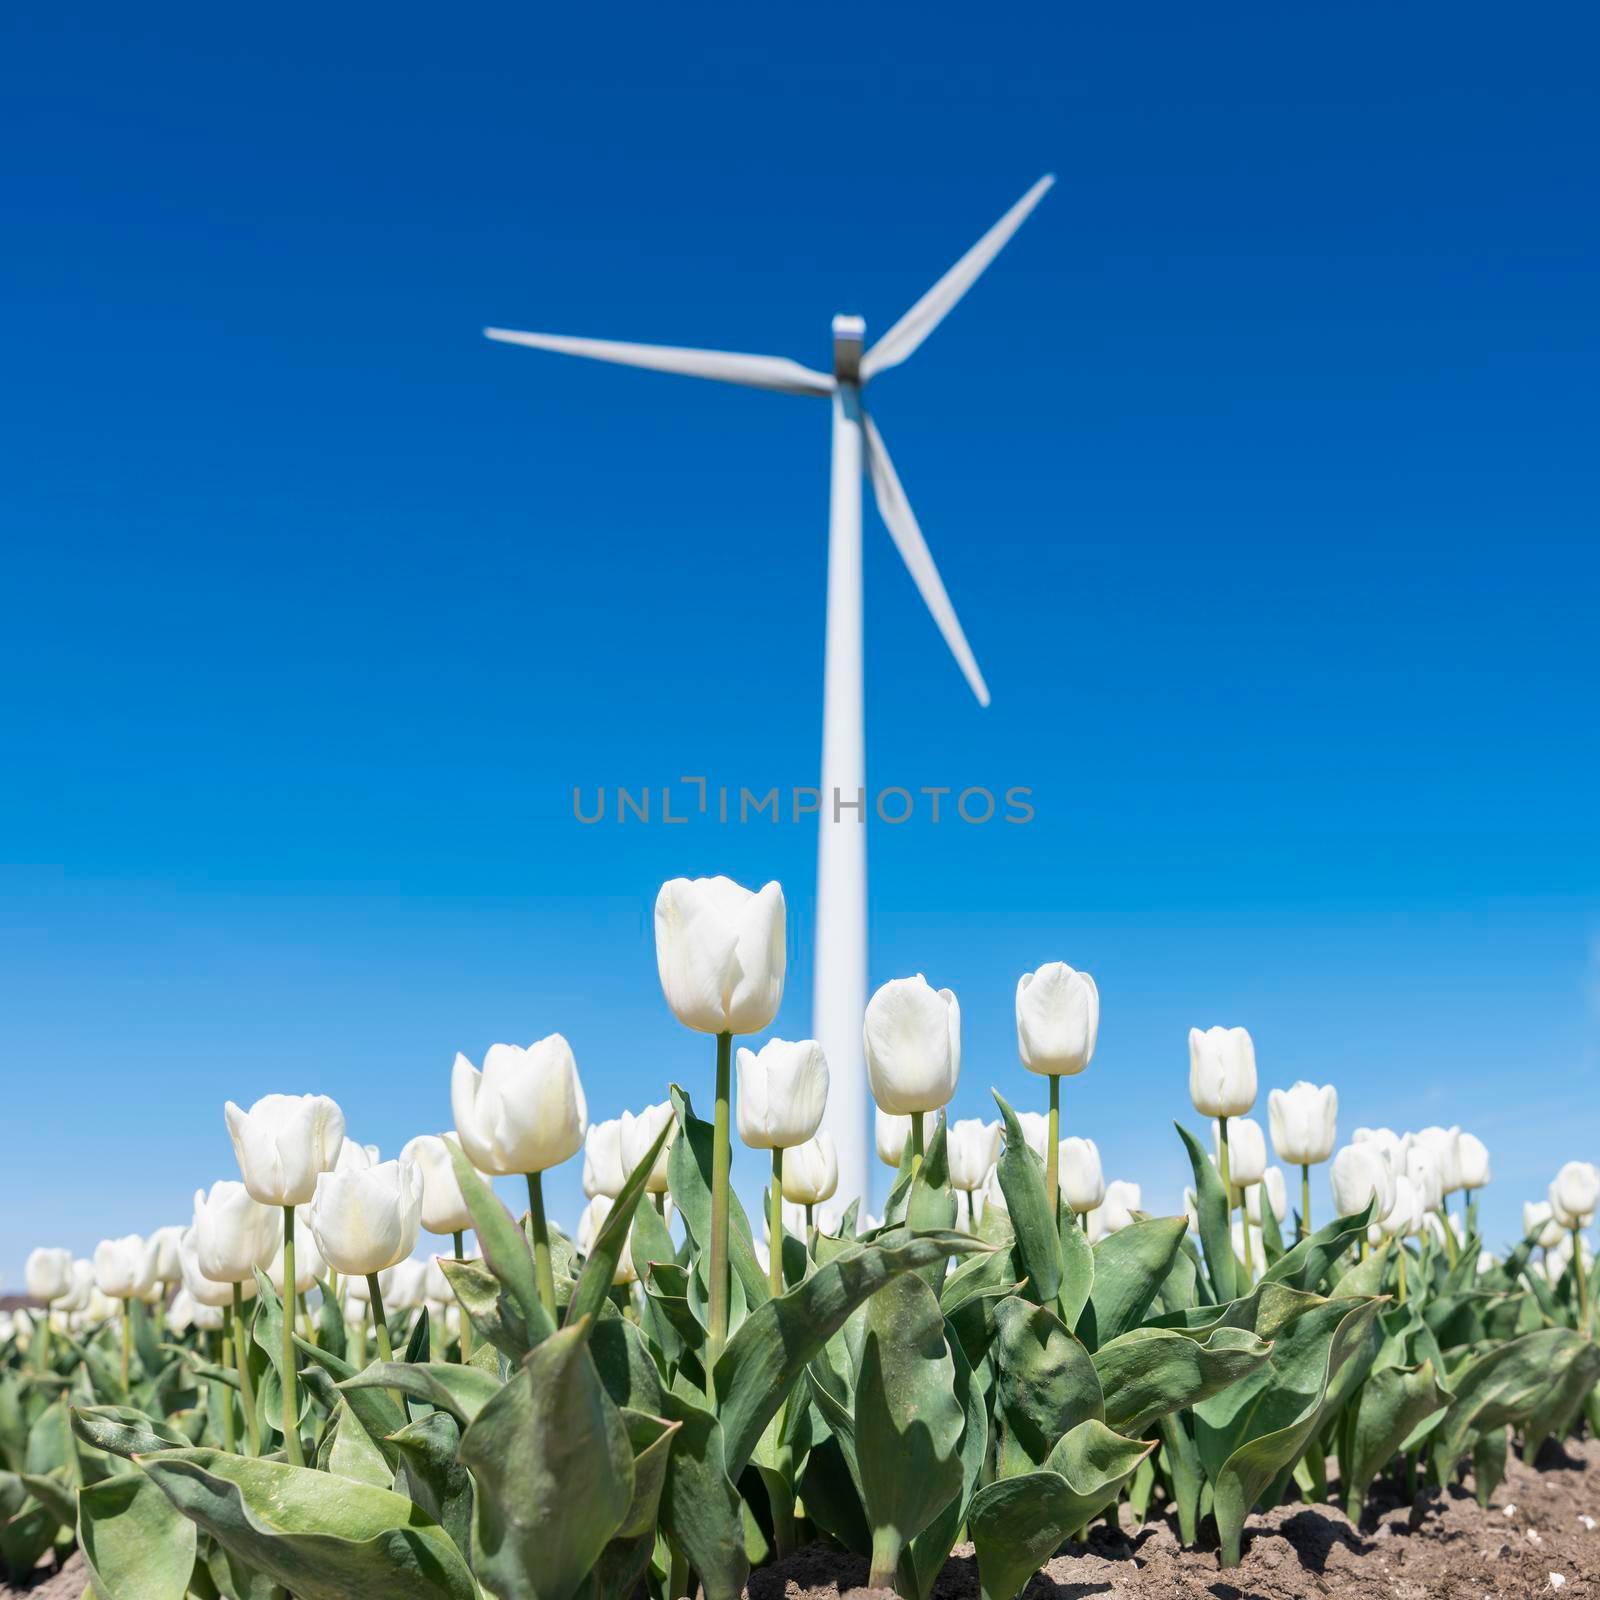 field with white tulips near wind turbines in holland under blue sky by ahavelaar